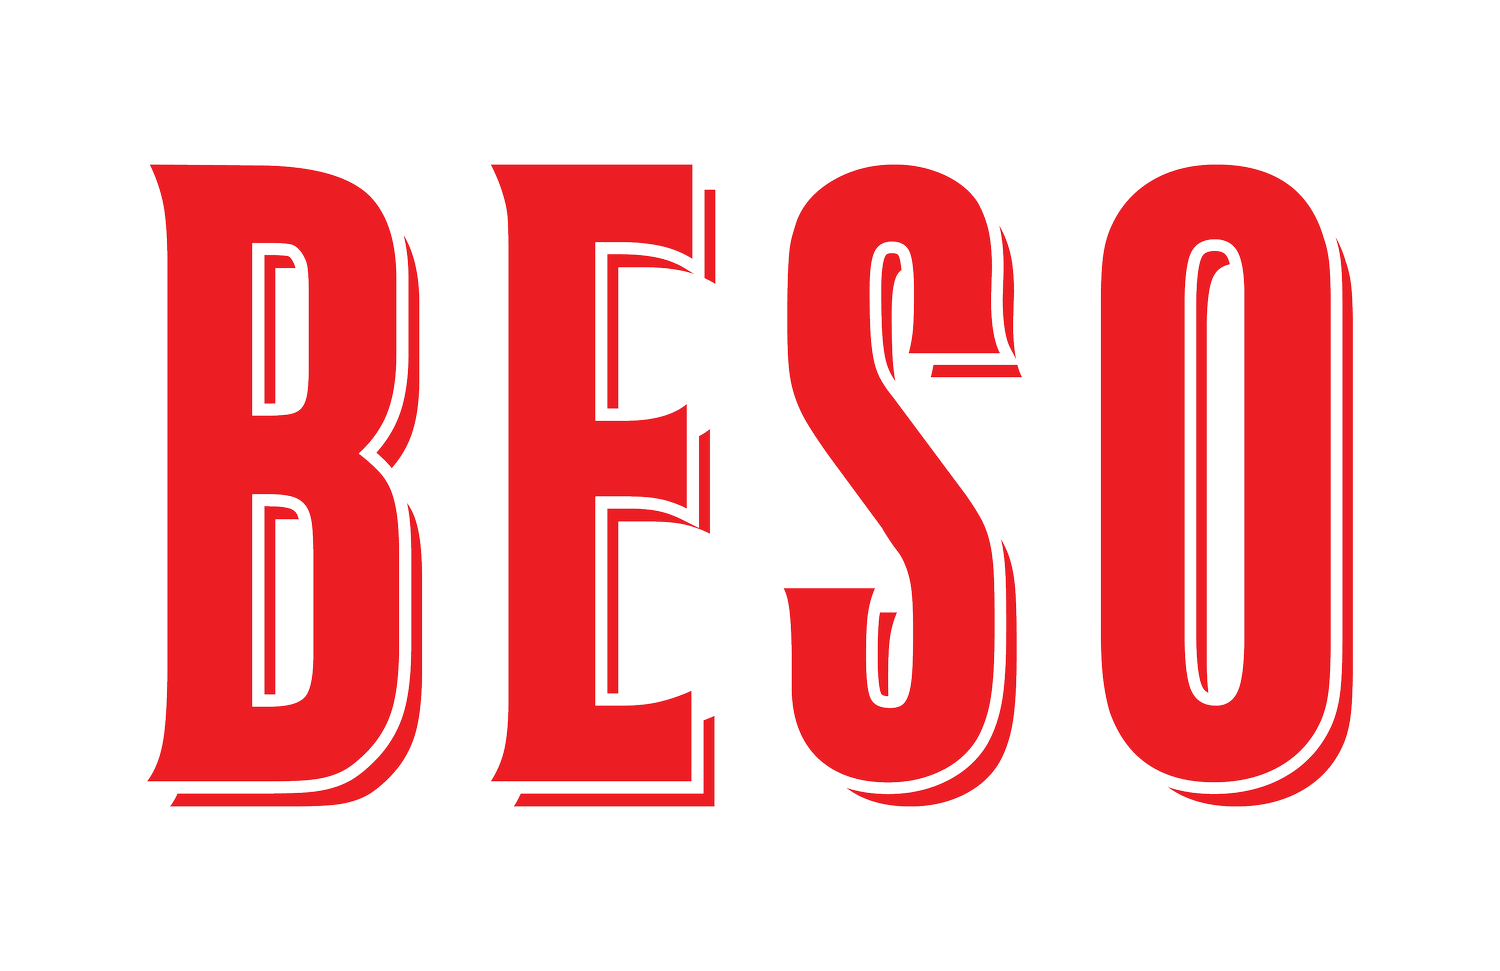 BESO